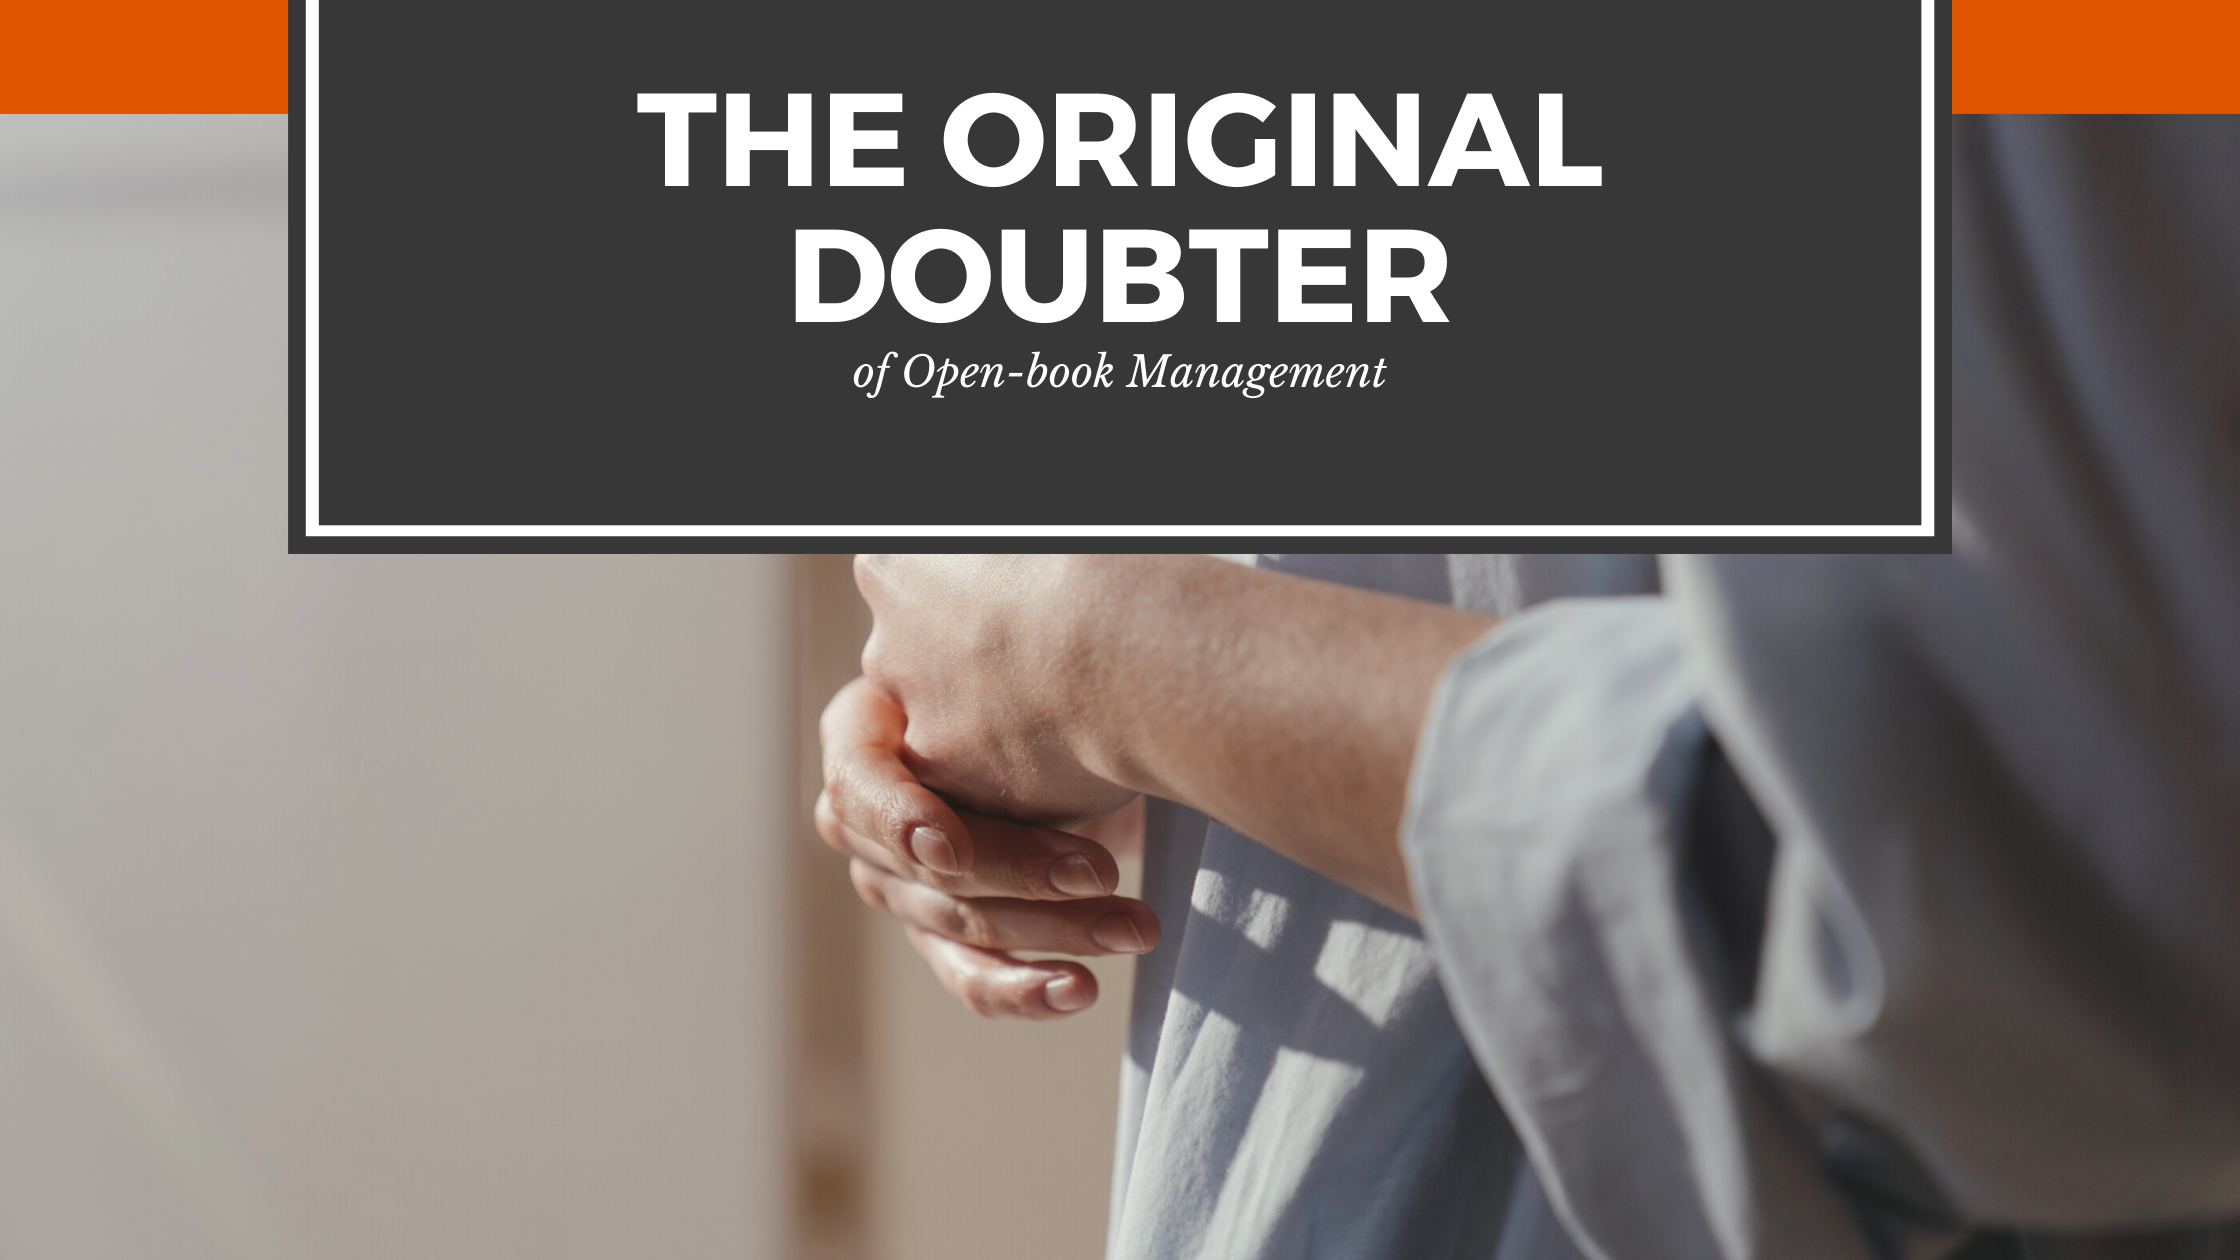 The Original doubter